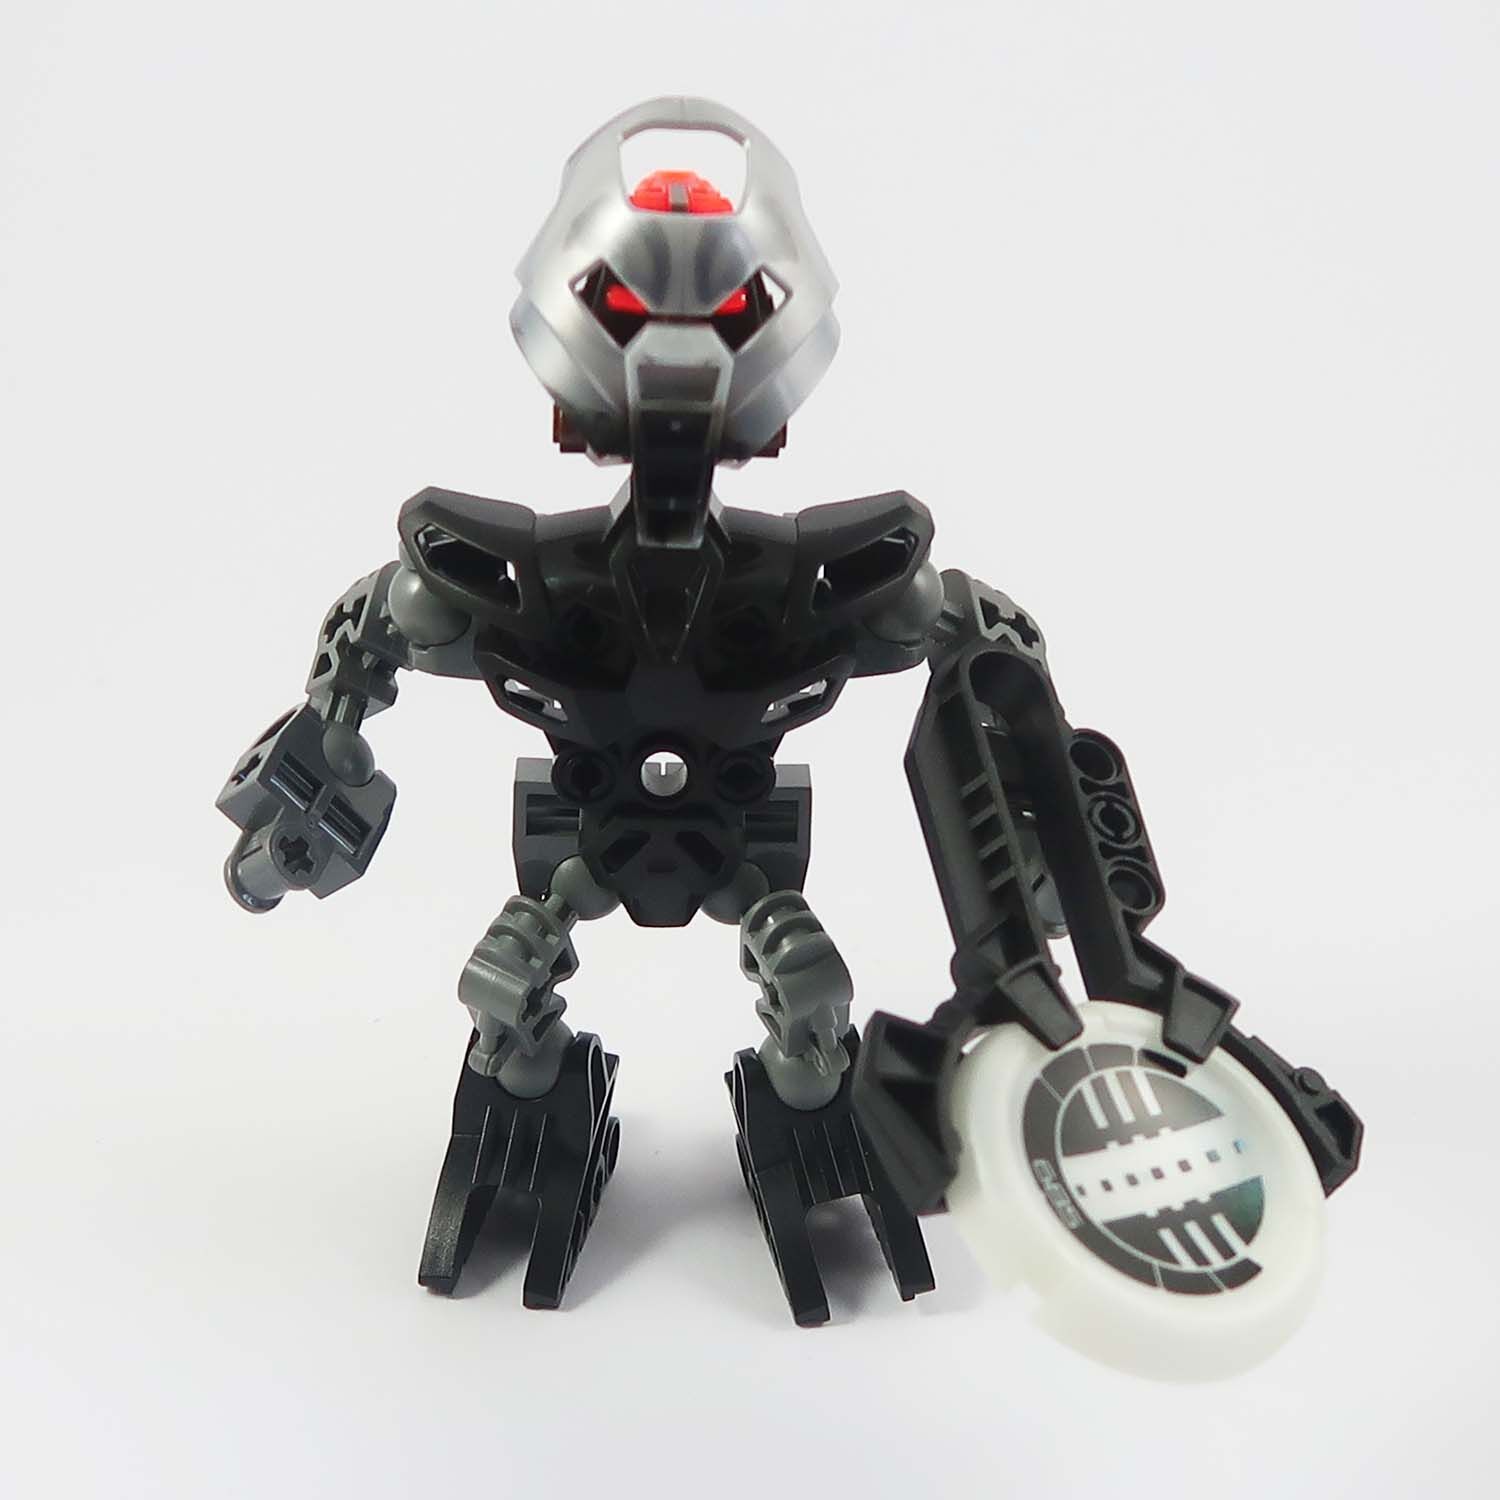 LEGO Bionicle - Matoran Tehutti (8609)